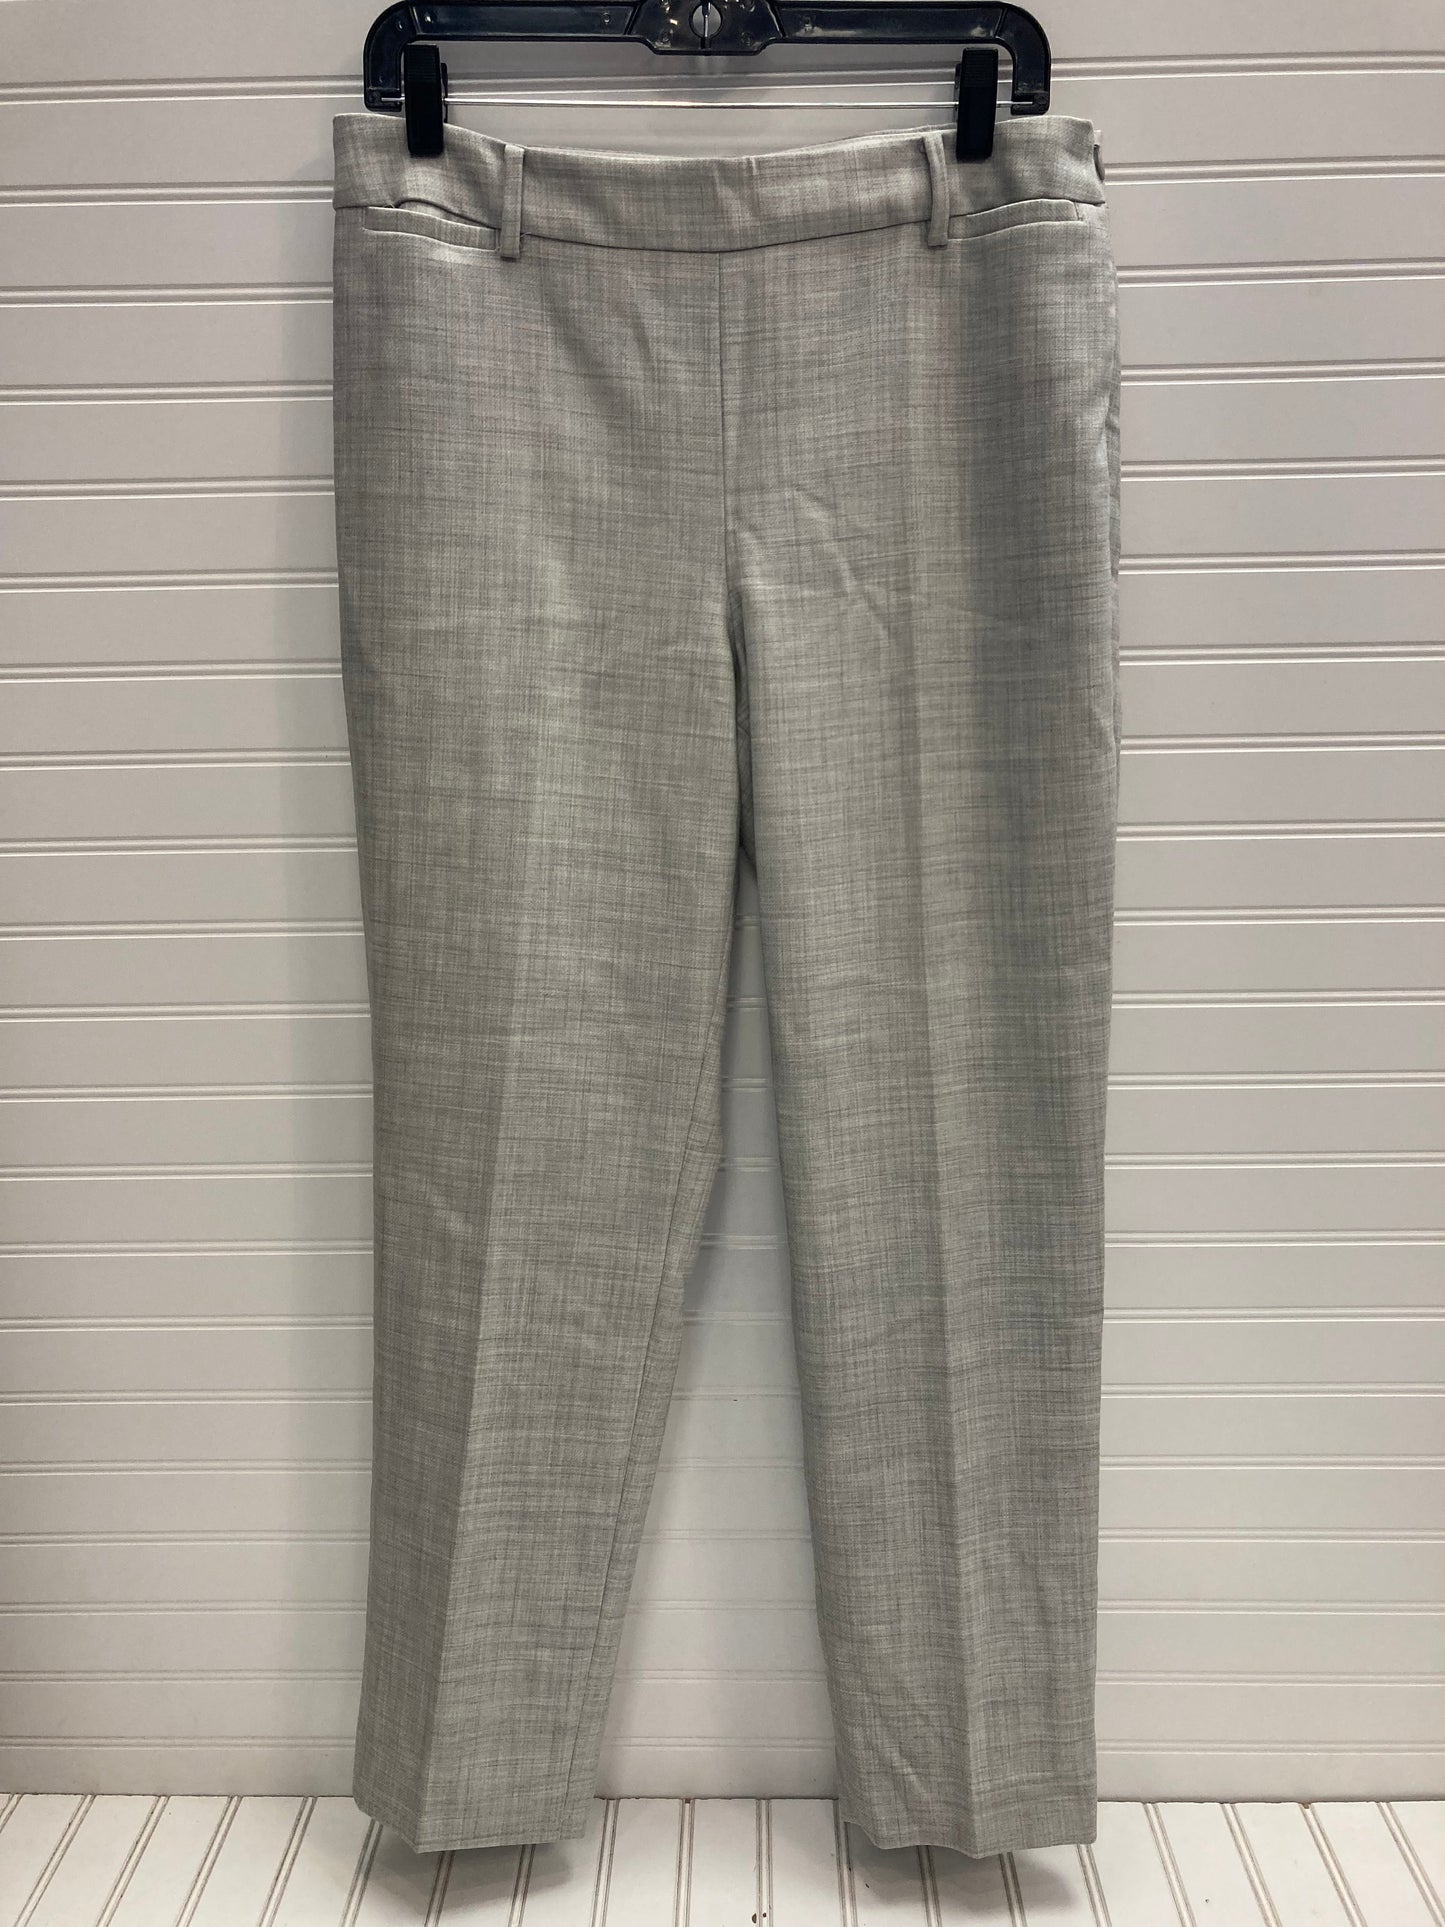 Grey Pants Dress Talbots, Size 10petite